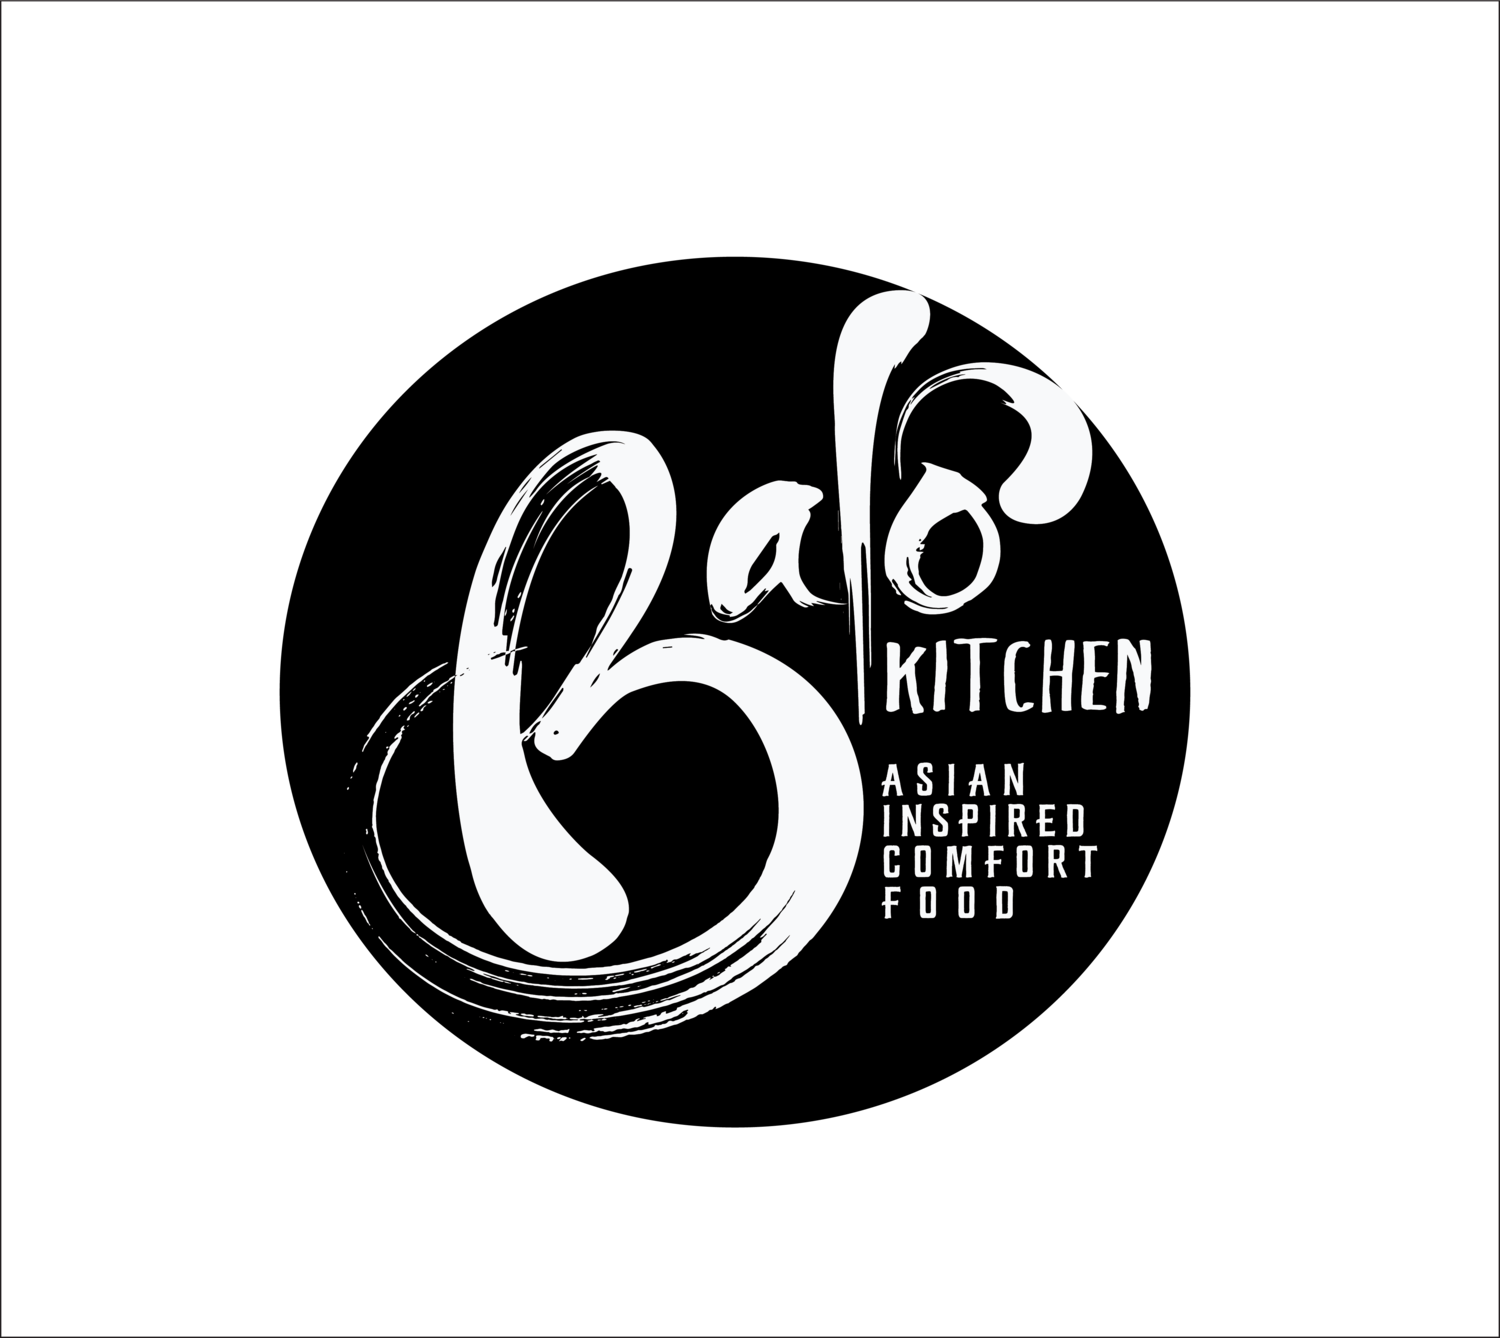 Balo Kitchen